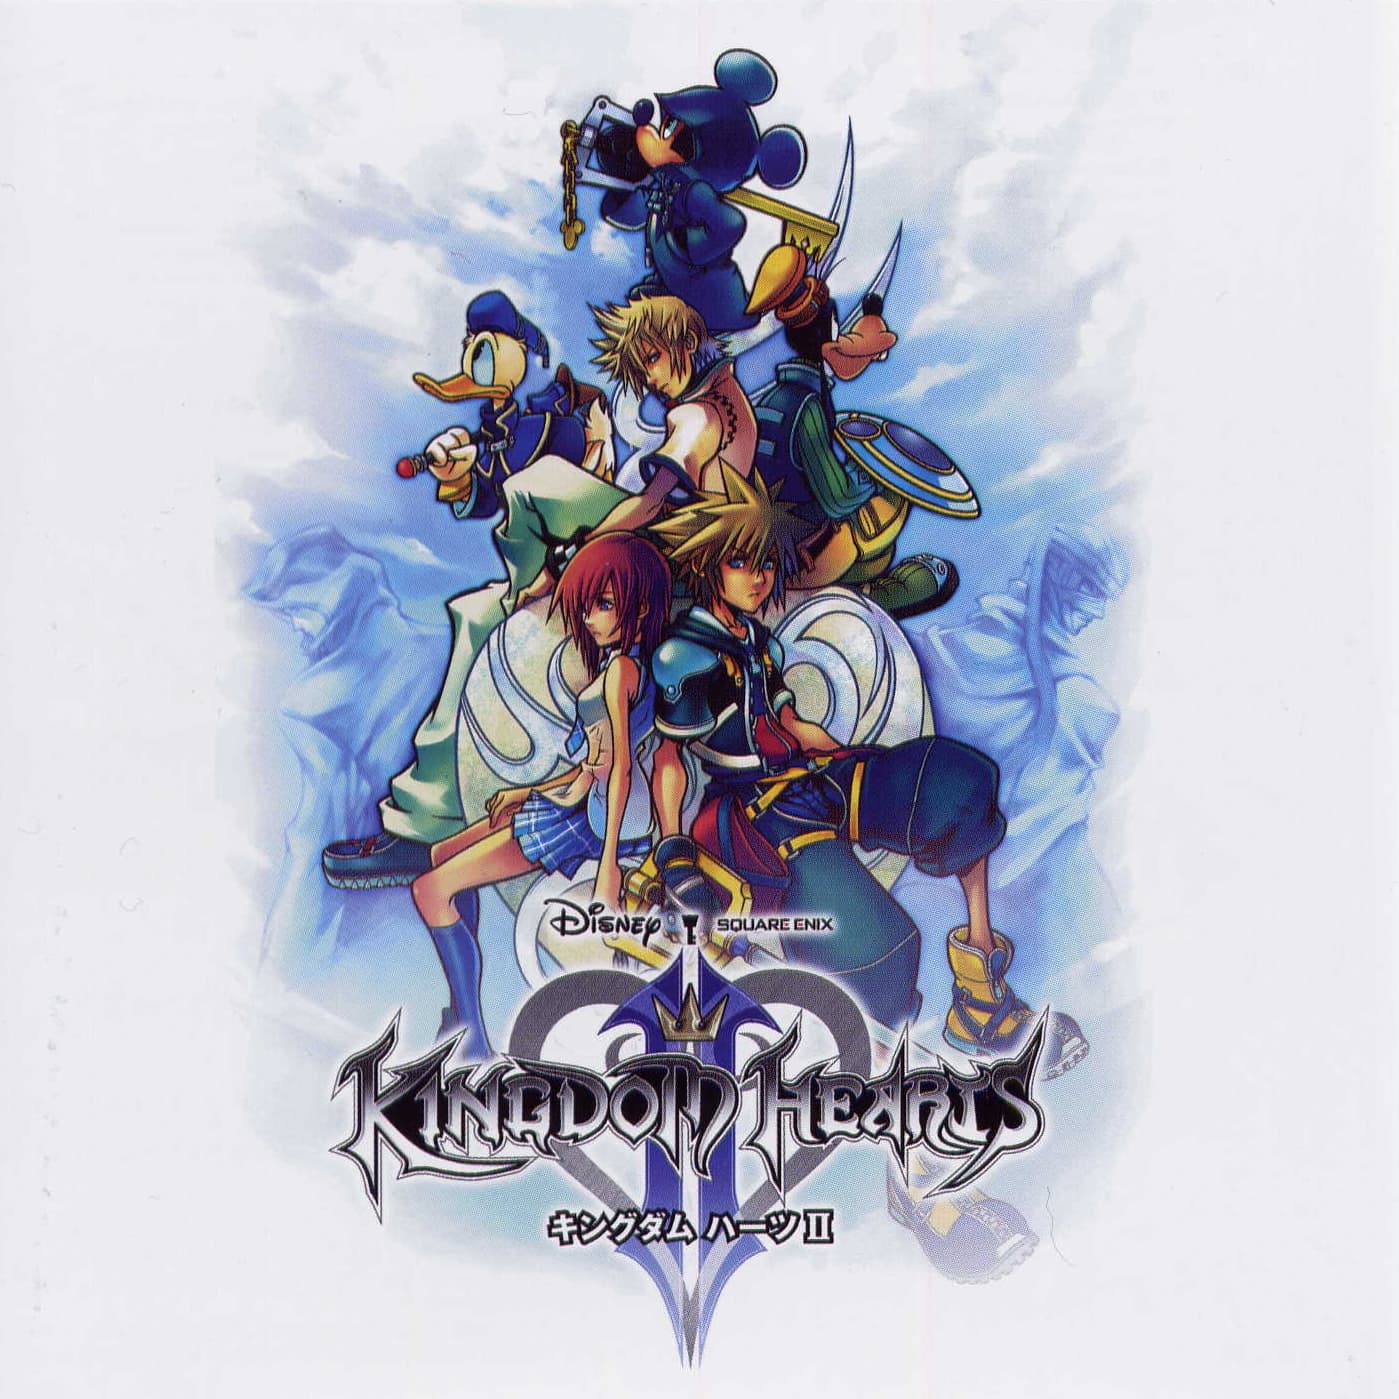 Kingdom Hearts II for ps2 